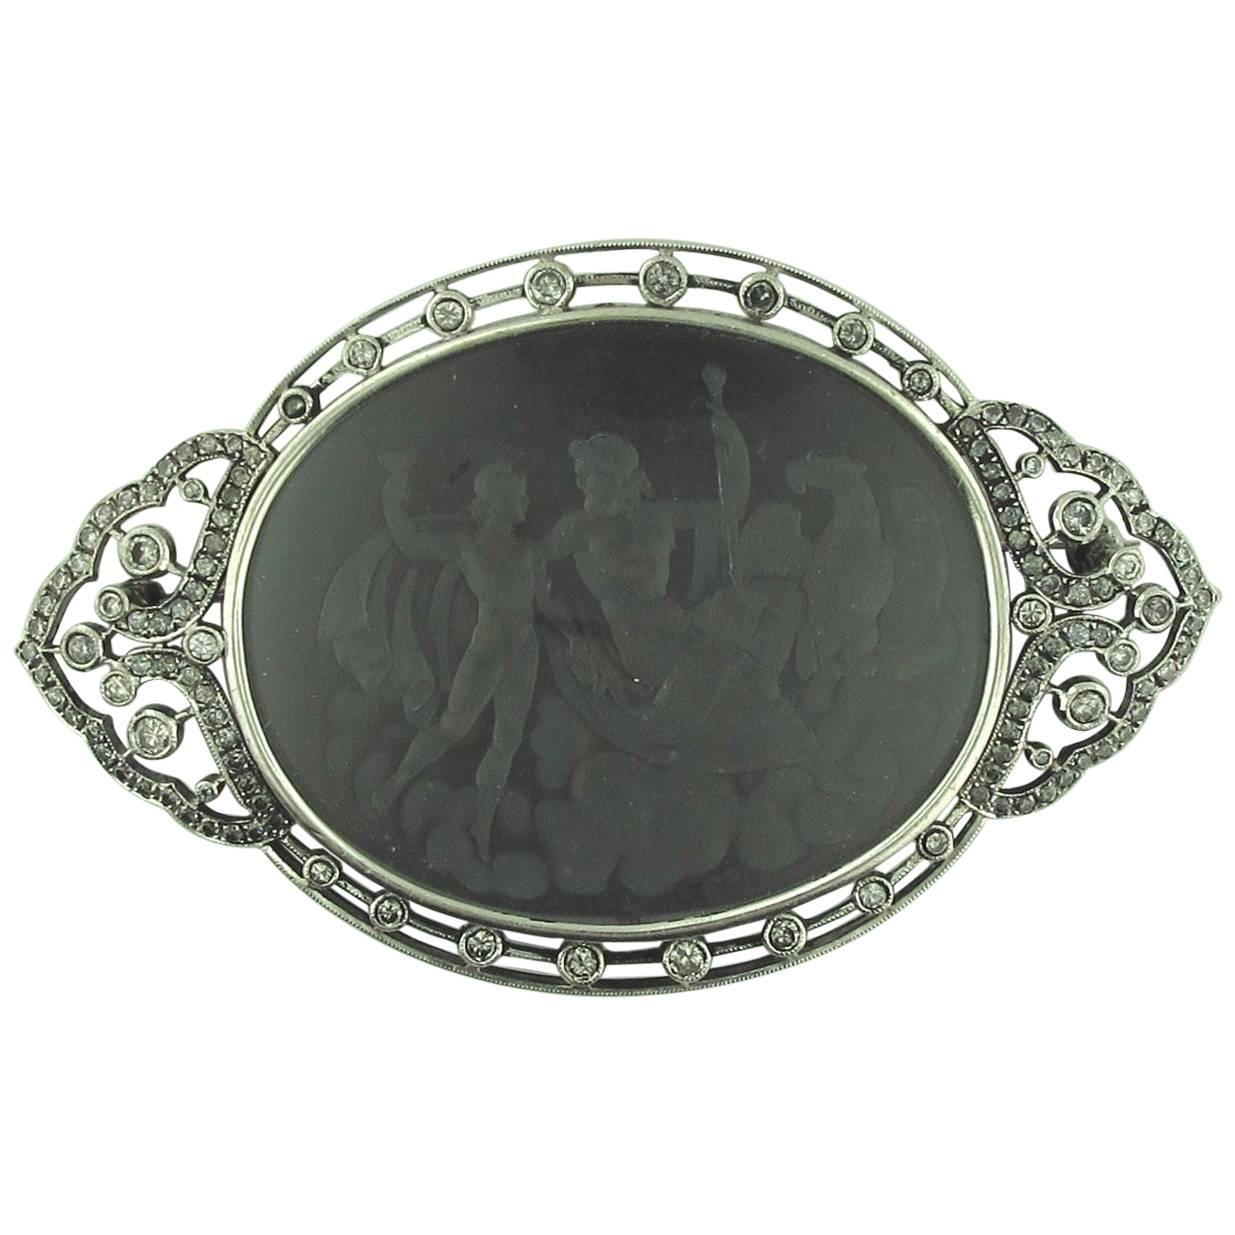 Signed "Putti" Platinum Black Onyx Brooch or Pendant, circa 1920